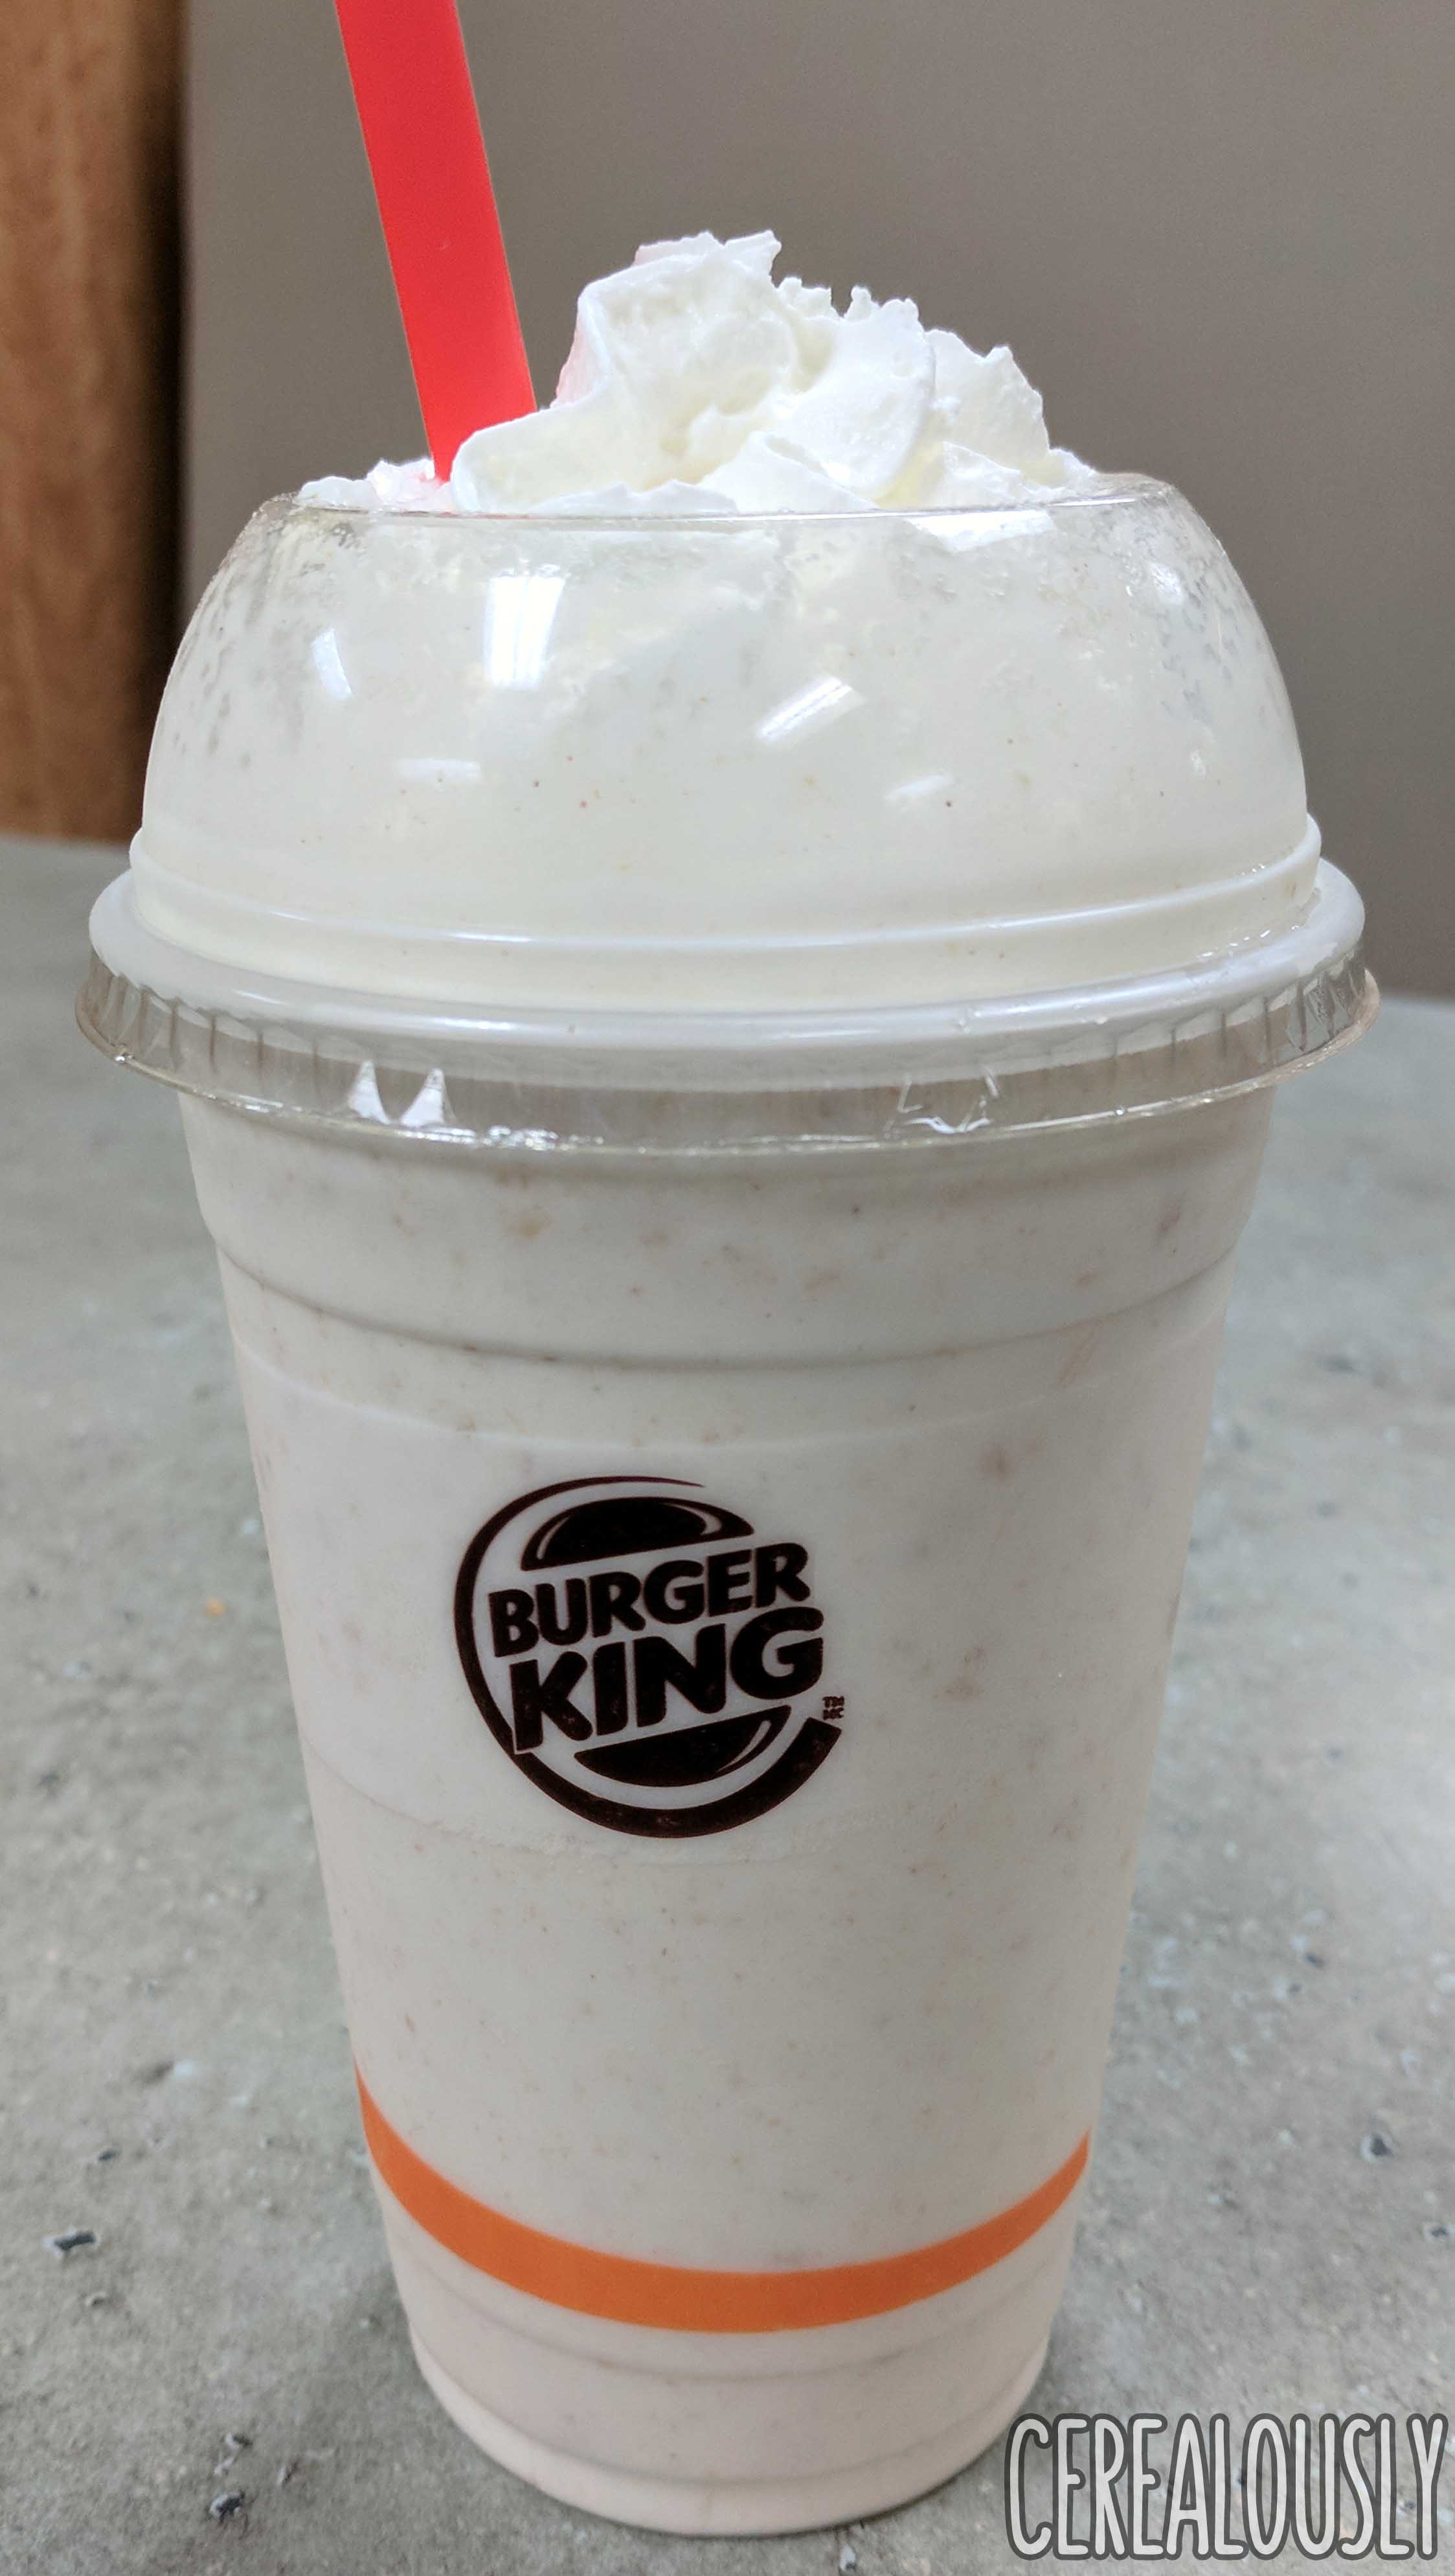 Does Burger King Have Milkshakes?